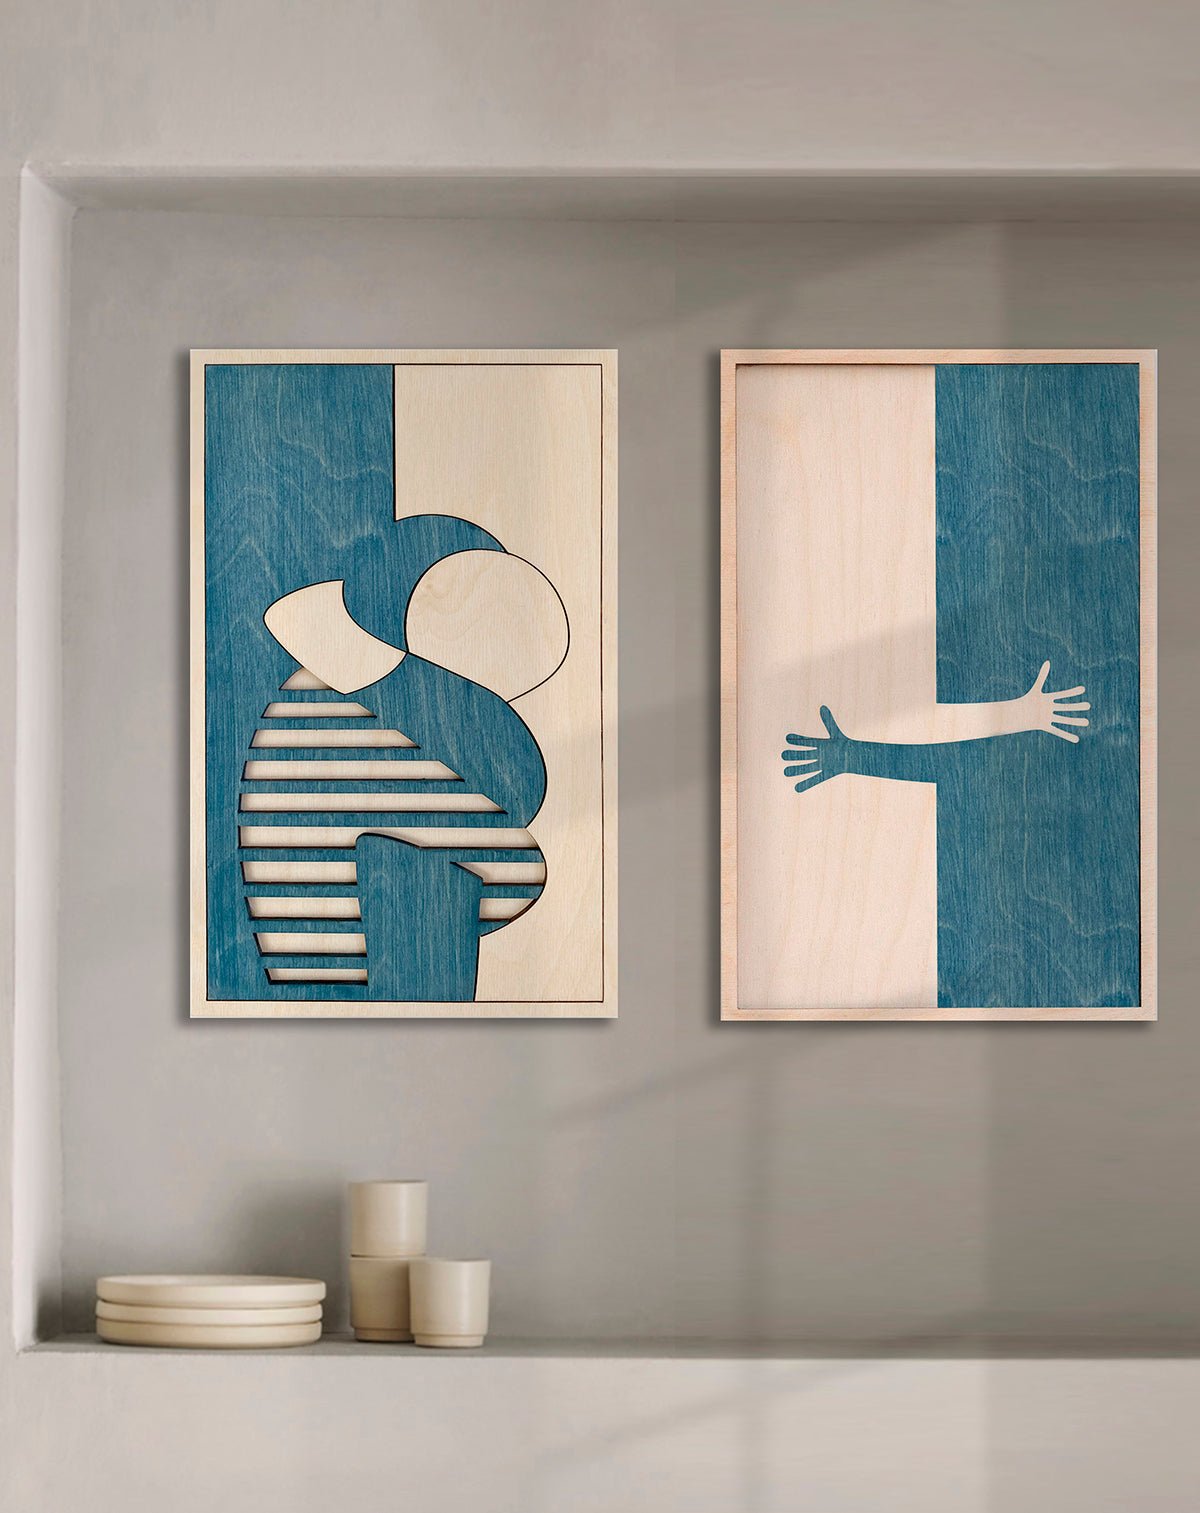 Graphic artwall with artworks of a hug by KOLEKTO studio